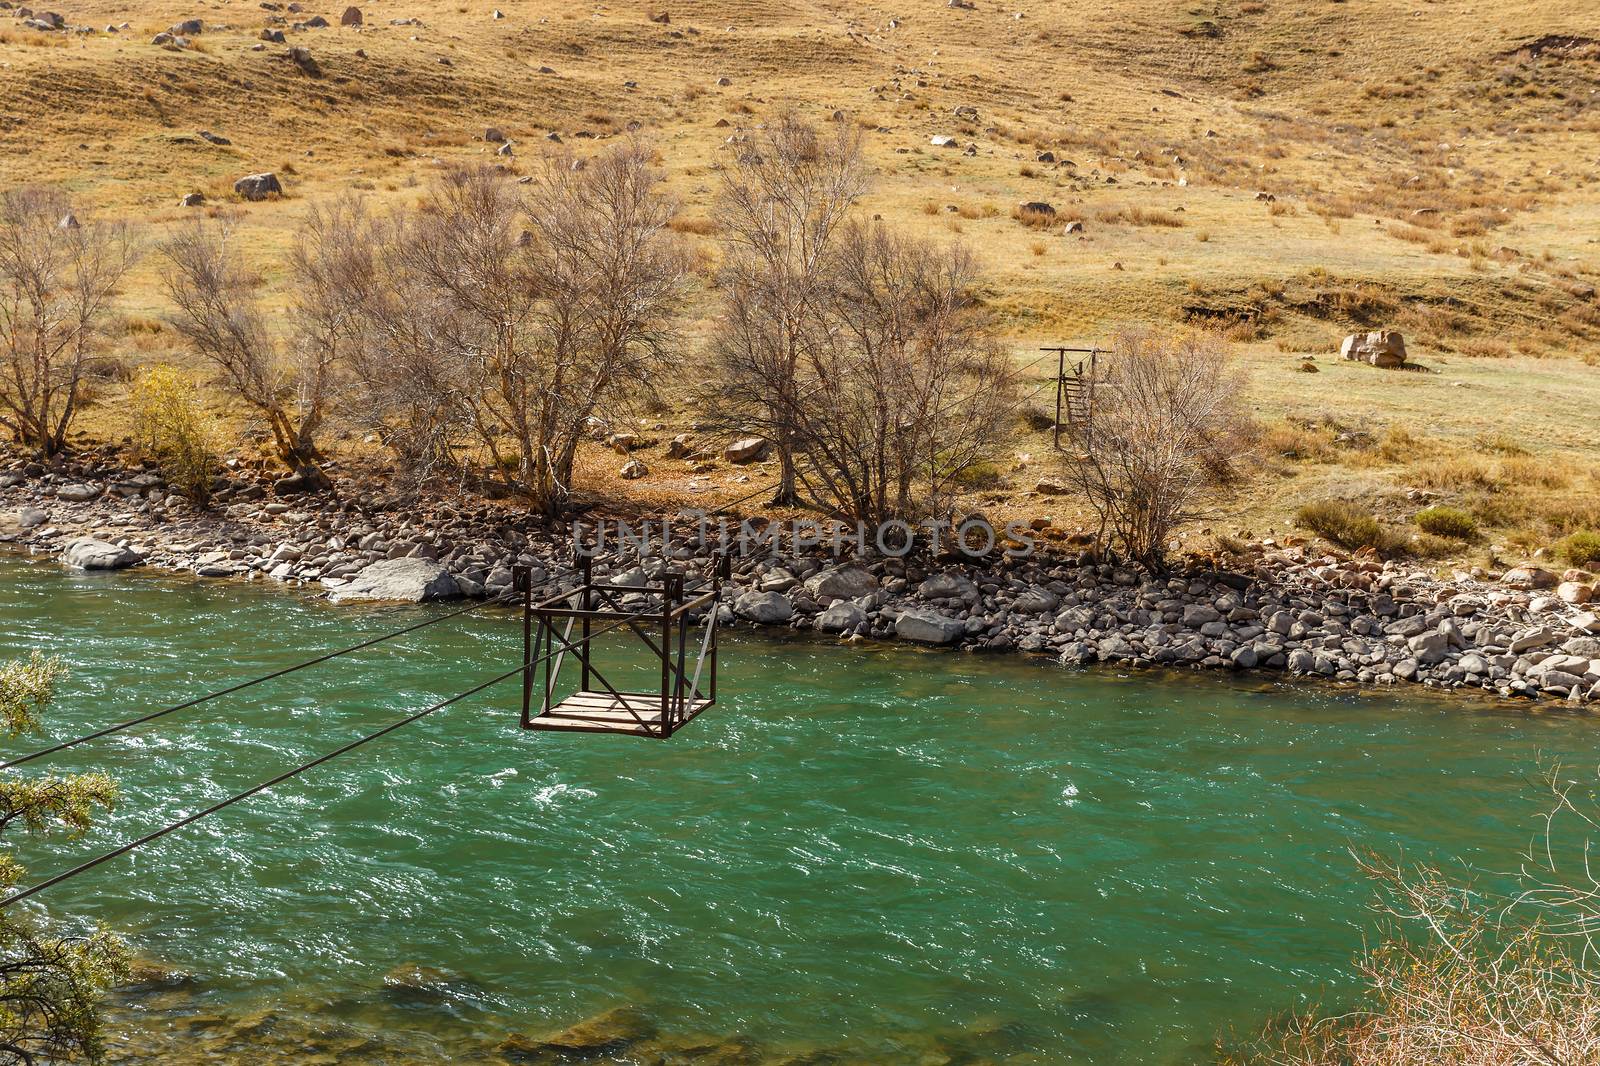 Kokemeren river, Djumgal Kyrgyzstan by Mieszko9